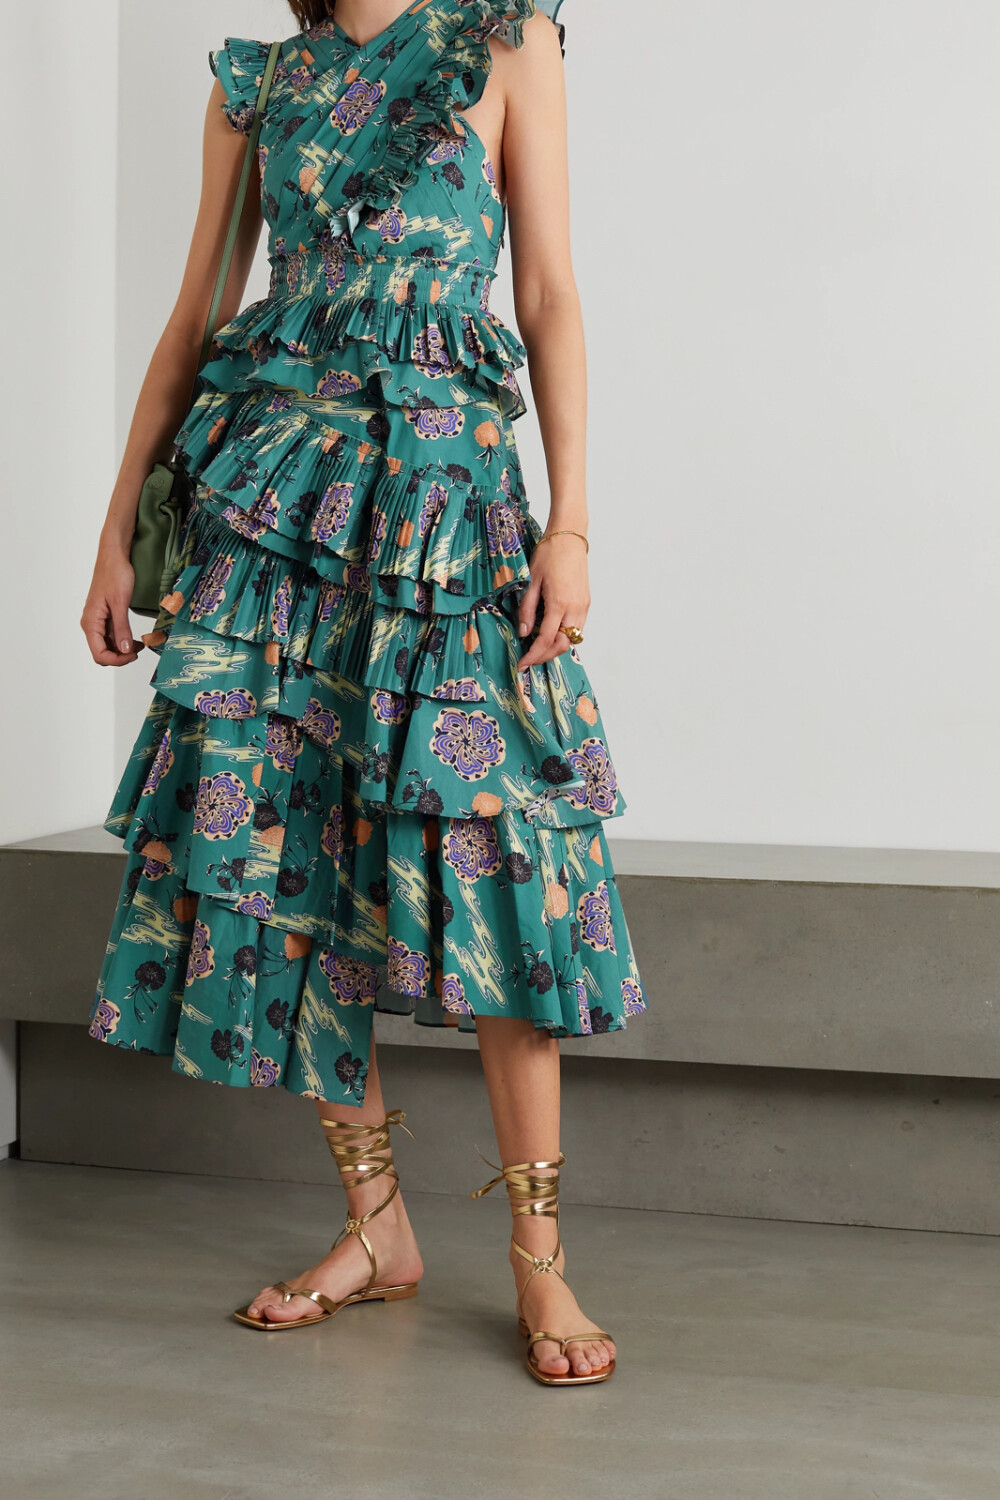 Ulla Johnson 从和风艺术汲取灵感，创作出 2021 春夏系列。这款 “Aurore” 连衣裙上的折纸风褶裥和精美荷叶边即是其中的典范设计元素。它采用 “River Blossom” 印花纯棉府绸制成，上身呈交叉样式，分层式裙摆丰盈立体。建议与细带凉鞋搭配。